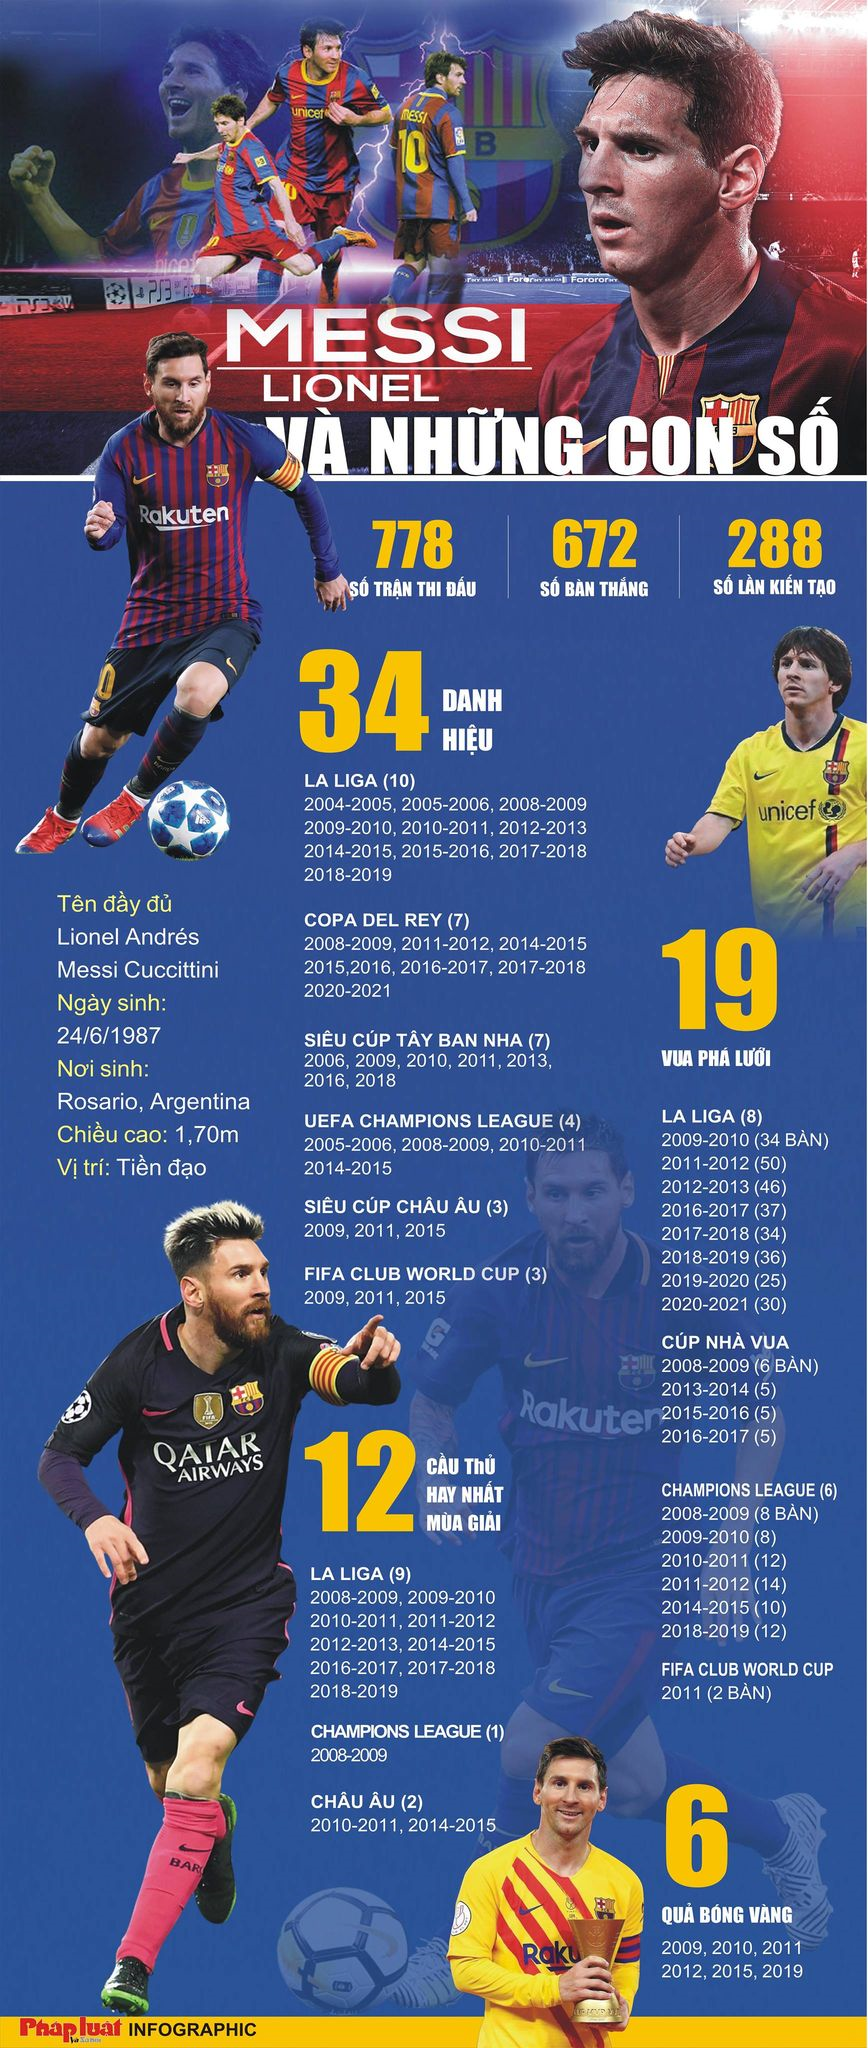 Lionel Messi và những con số